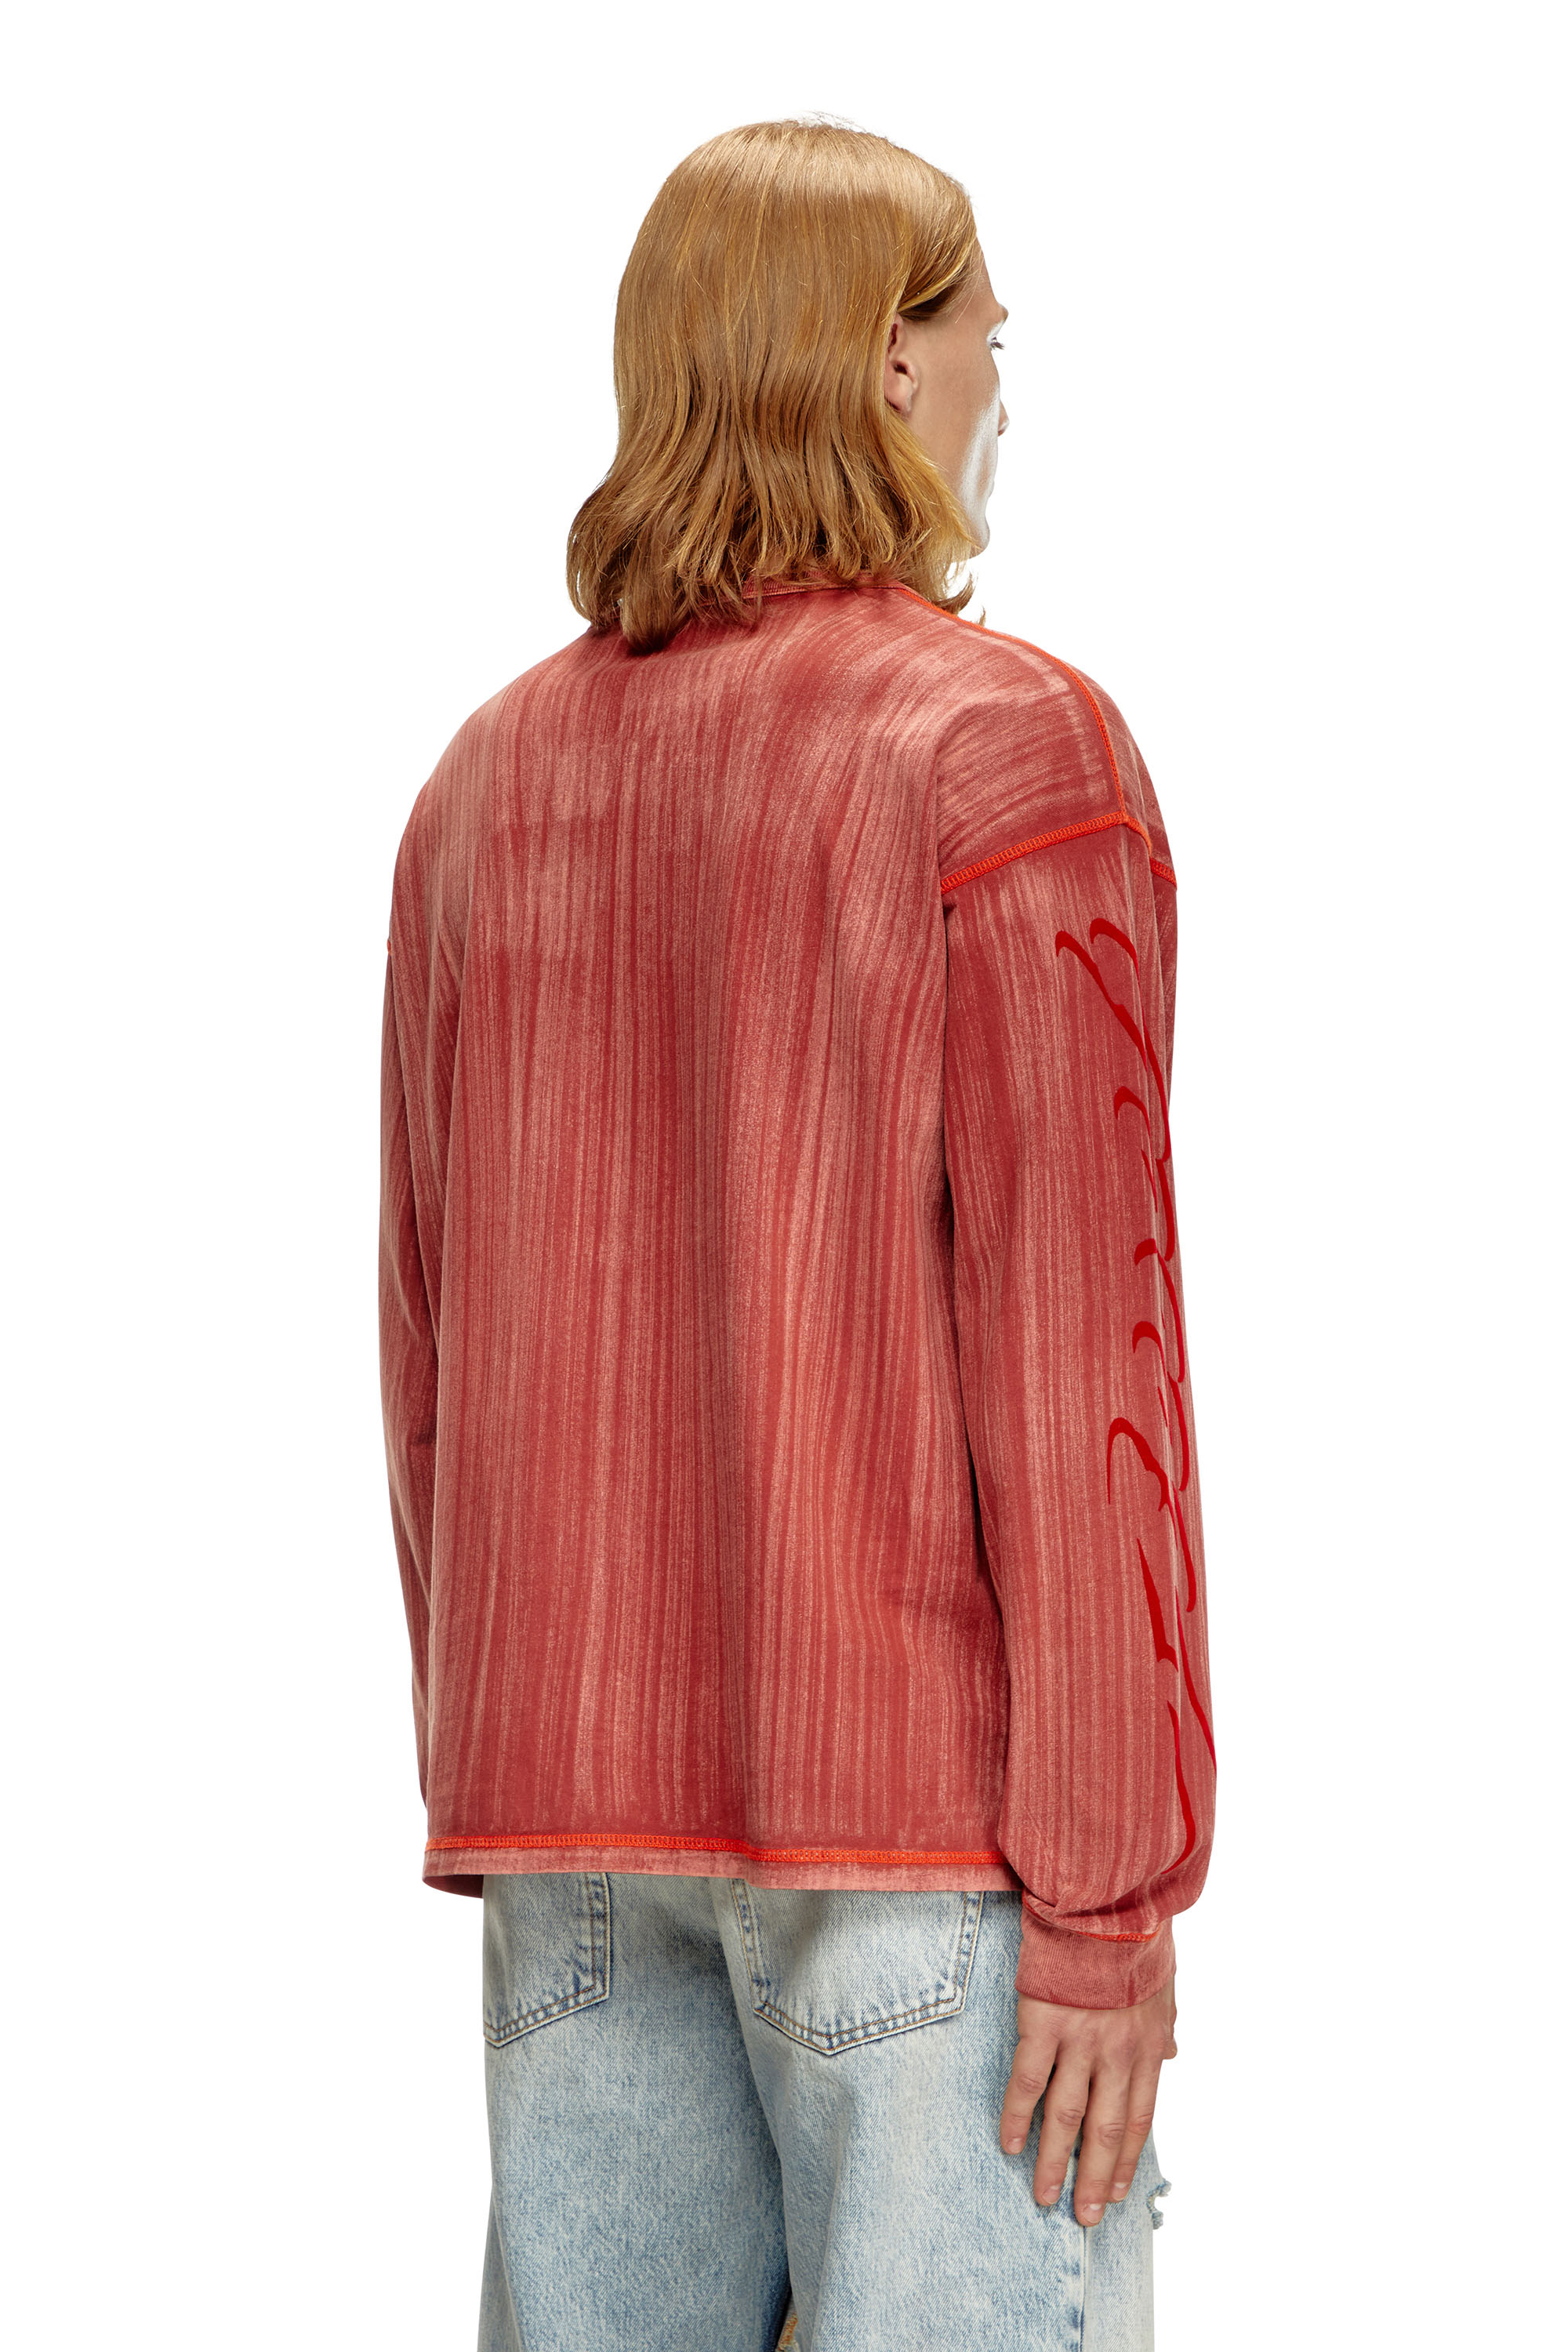 Diesel - T-BOXT-LS-Q2, Hombre Camiseta de manga larga con desteñido a pinceladas in Rojo - Image 2